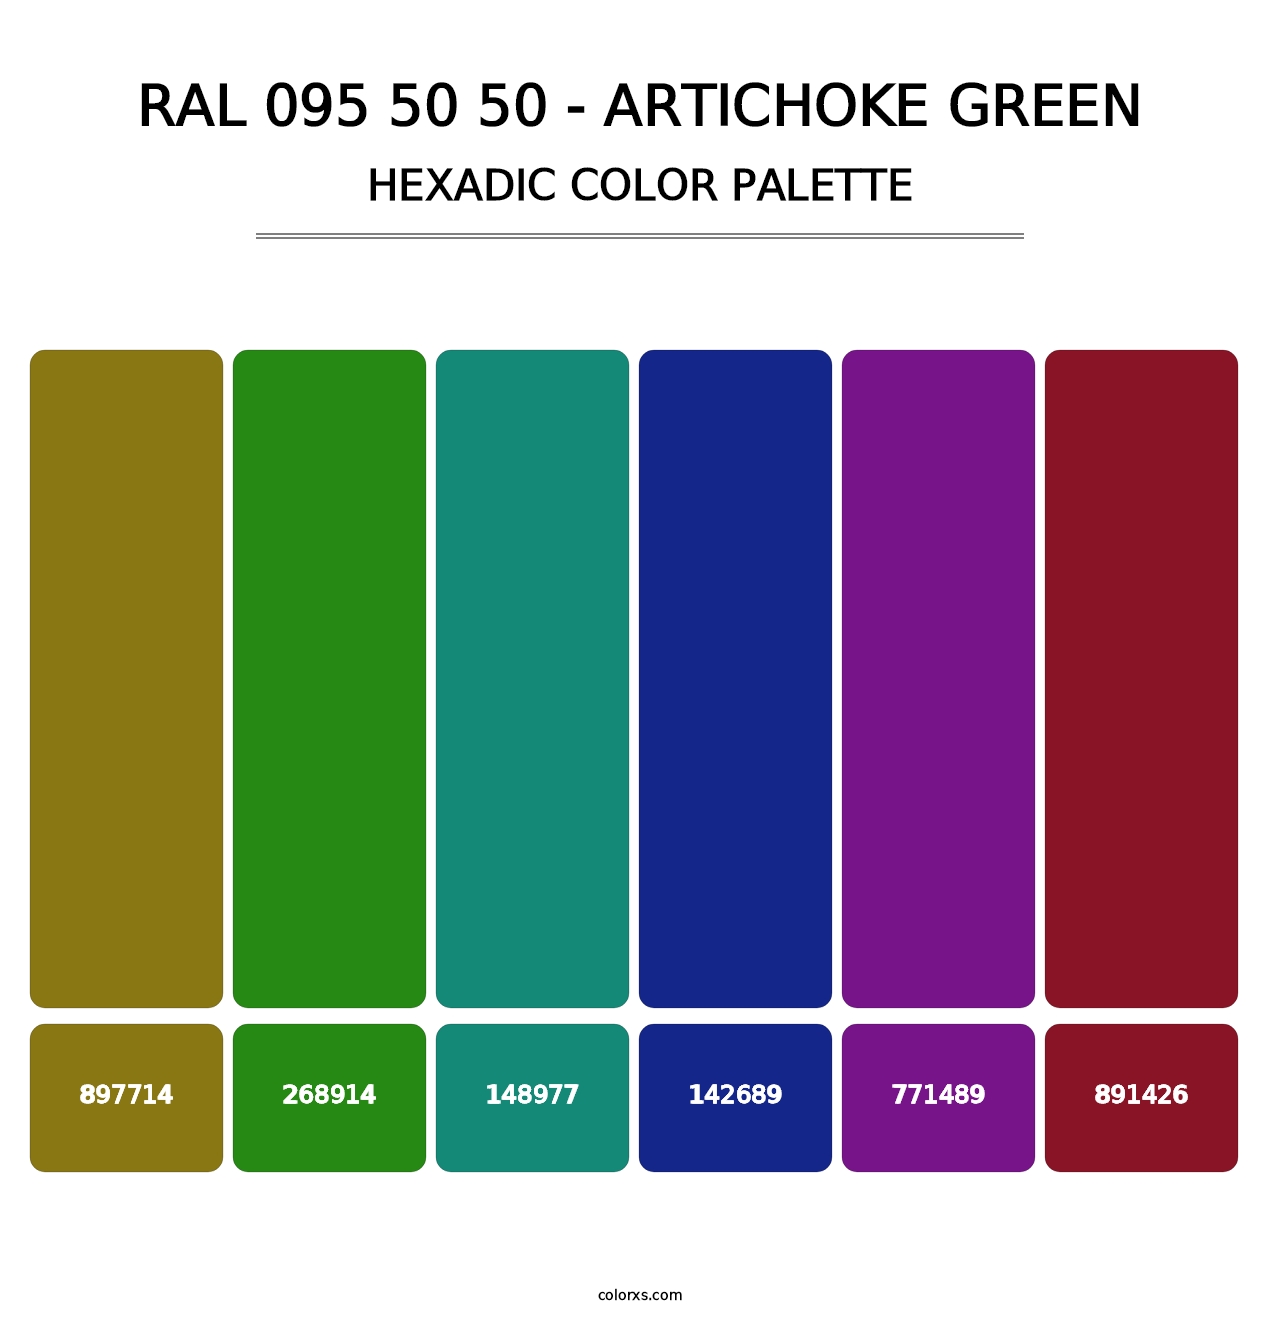 RAL 095 50 50 - Artichoke Green - Hexadic Color Palette